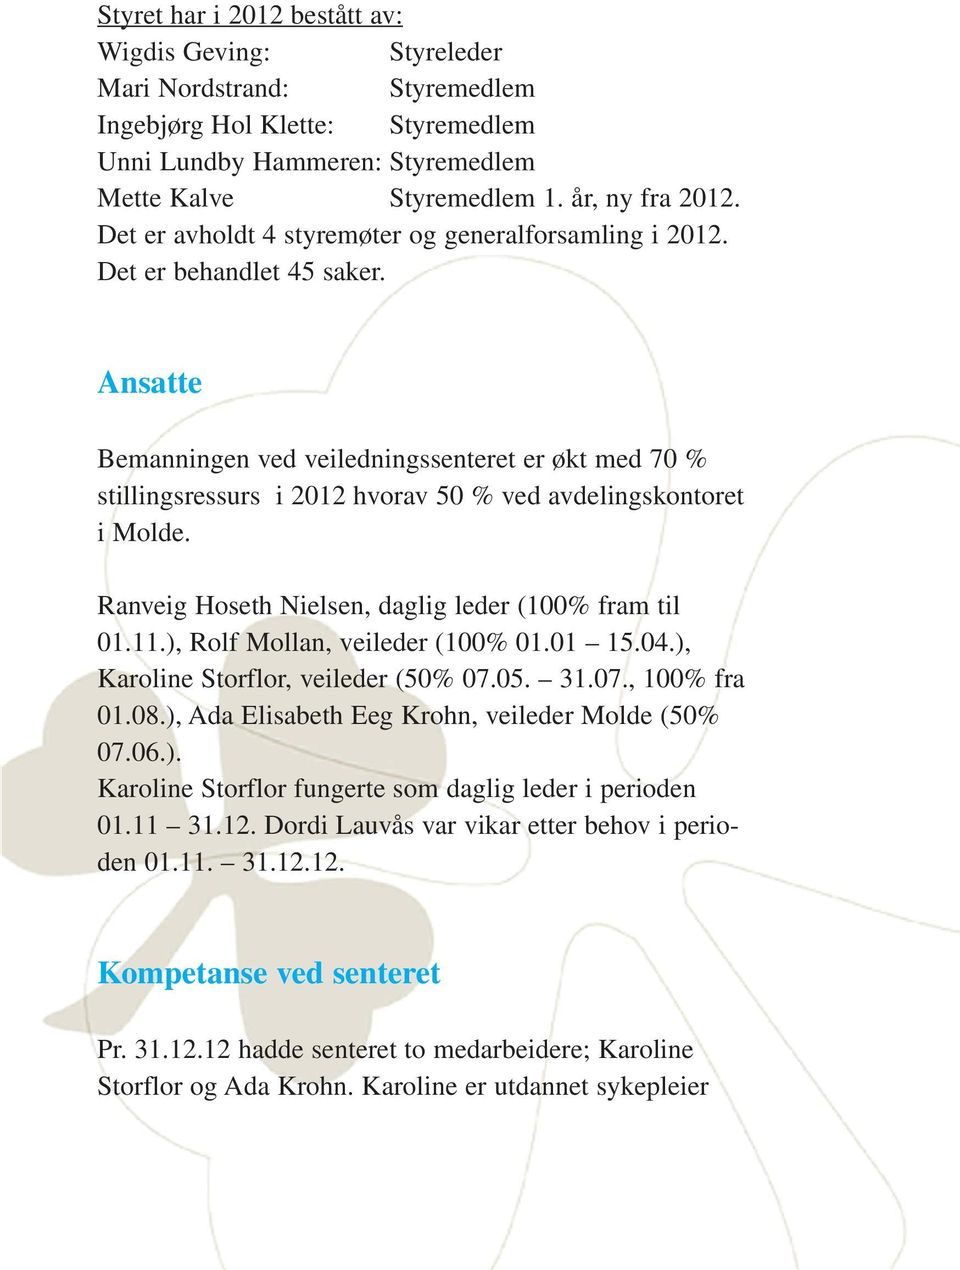 Ansatte Bemanningen ved veiledningssenteret er økt med 70 % stillingsressurs i 2012 hvorav 50 % ved avdelingskontoret i Molde. Ranveig Hoseth Nielsen, daglig leder (100% fram til 01.11.